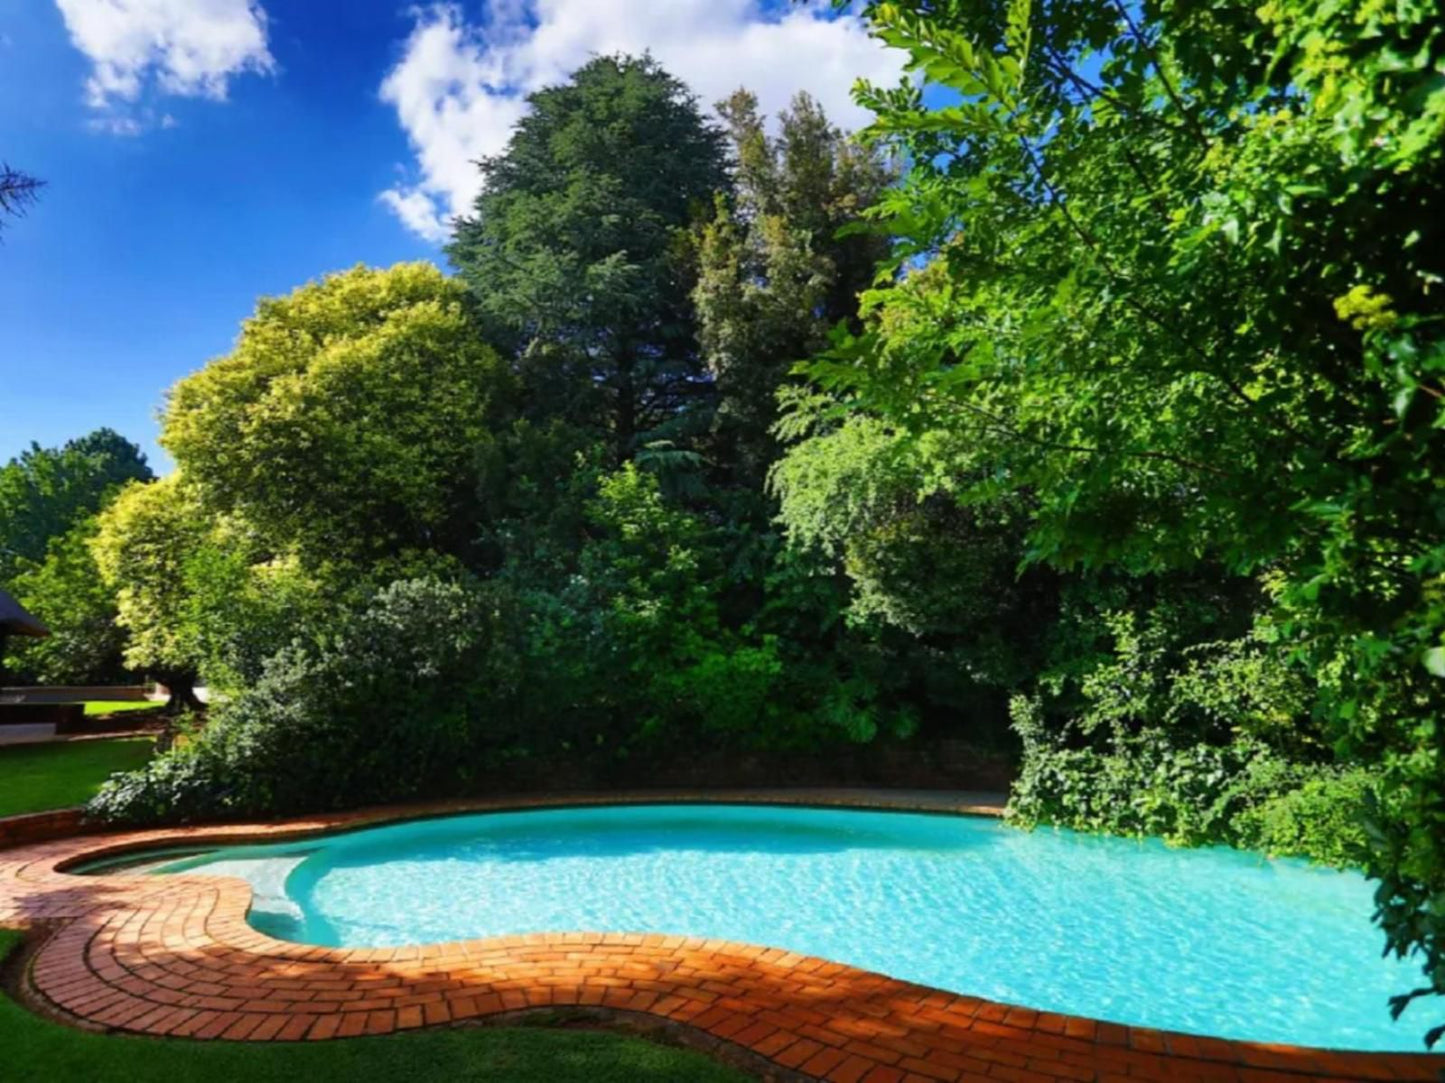 Andante Lodge Elardus Park Pretoria Tshwane Gauteng South Africa Complementary Colors, Garden, Nature, Plant, Swimming Pool